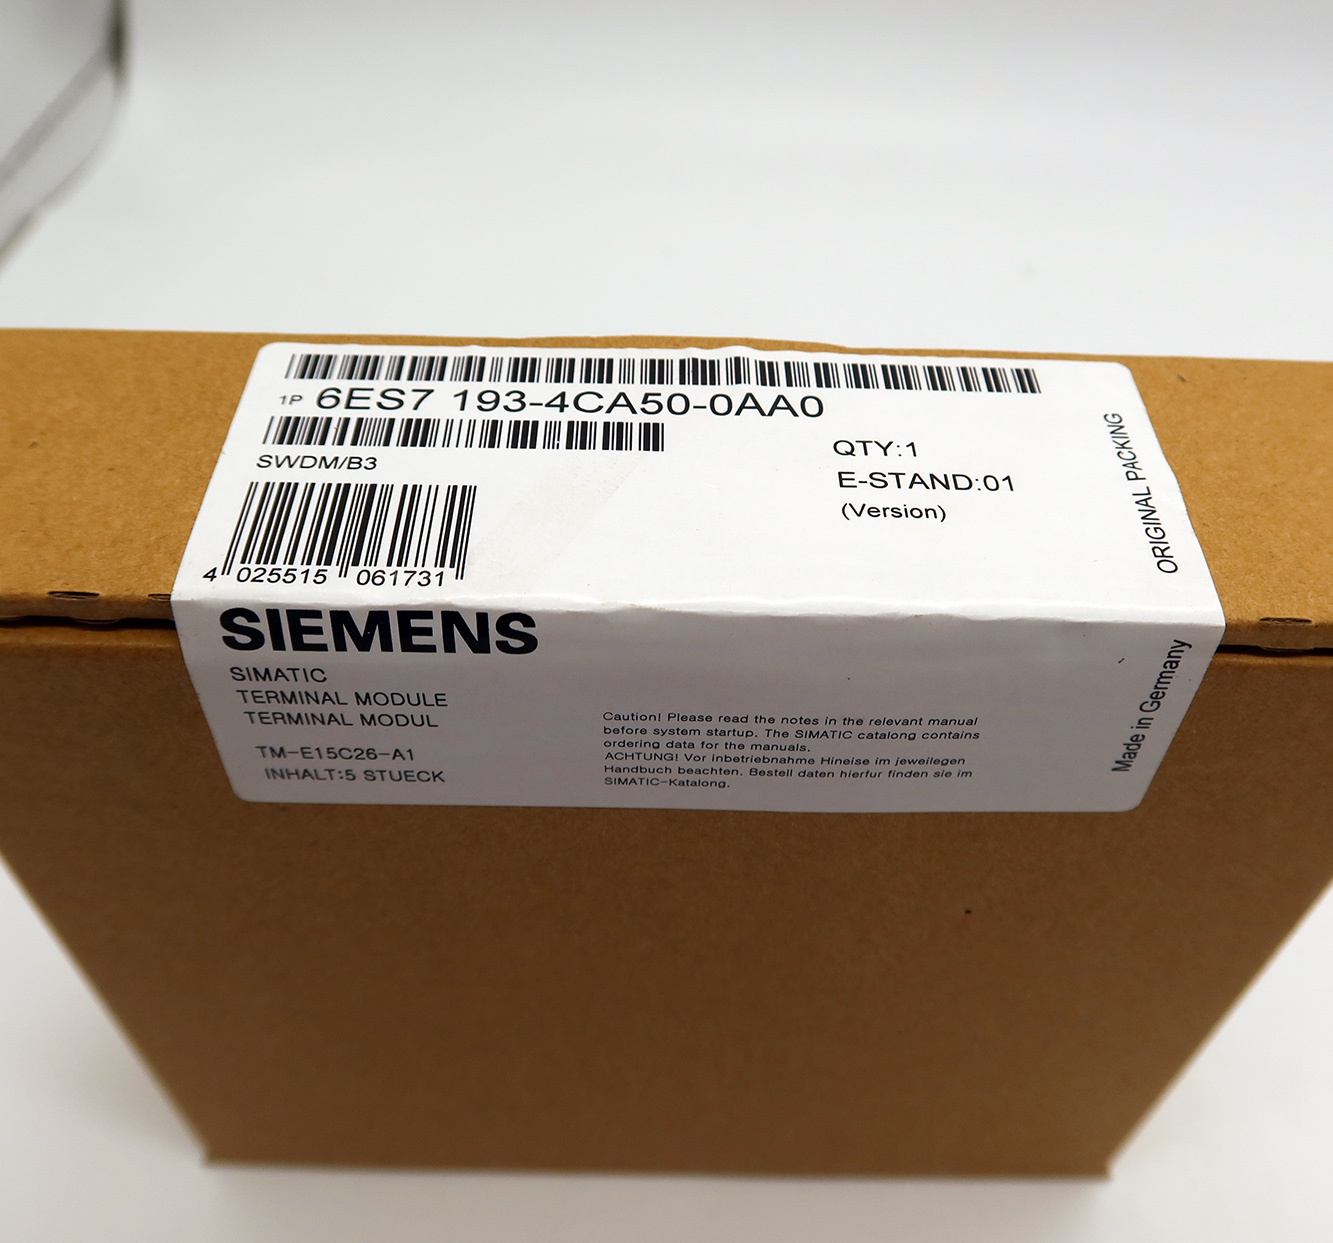 Siemens 6ES7193-4CA50-0AA0 Terminal Module Original